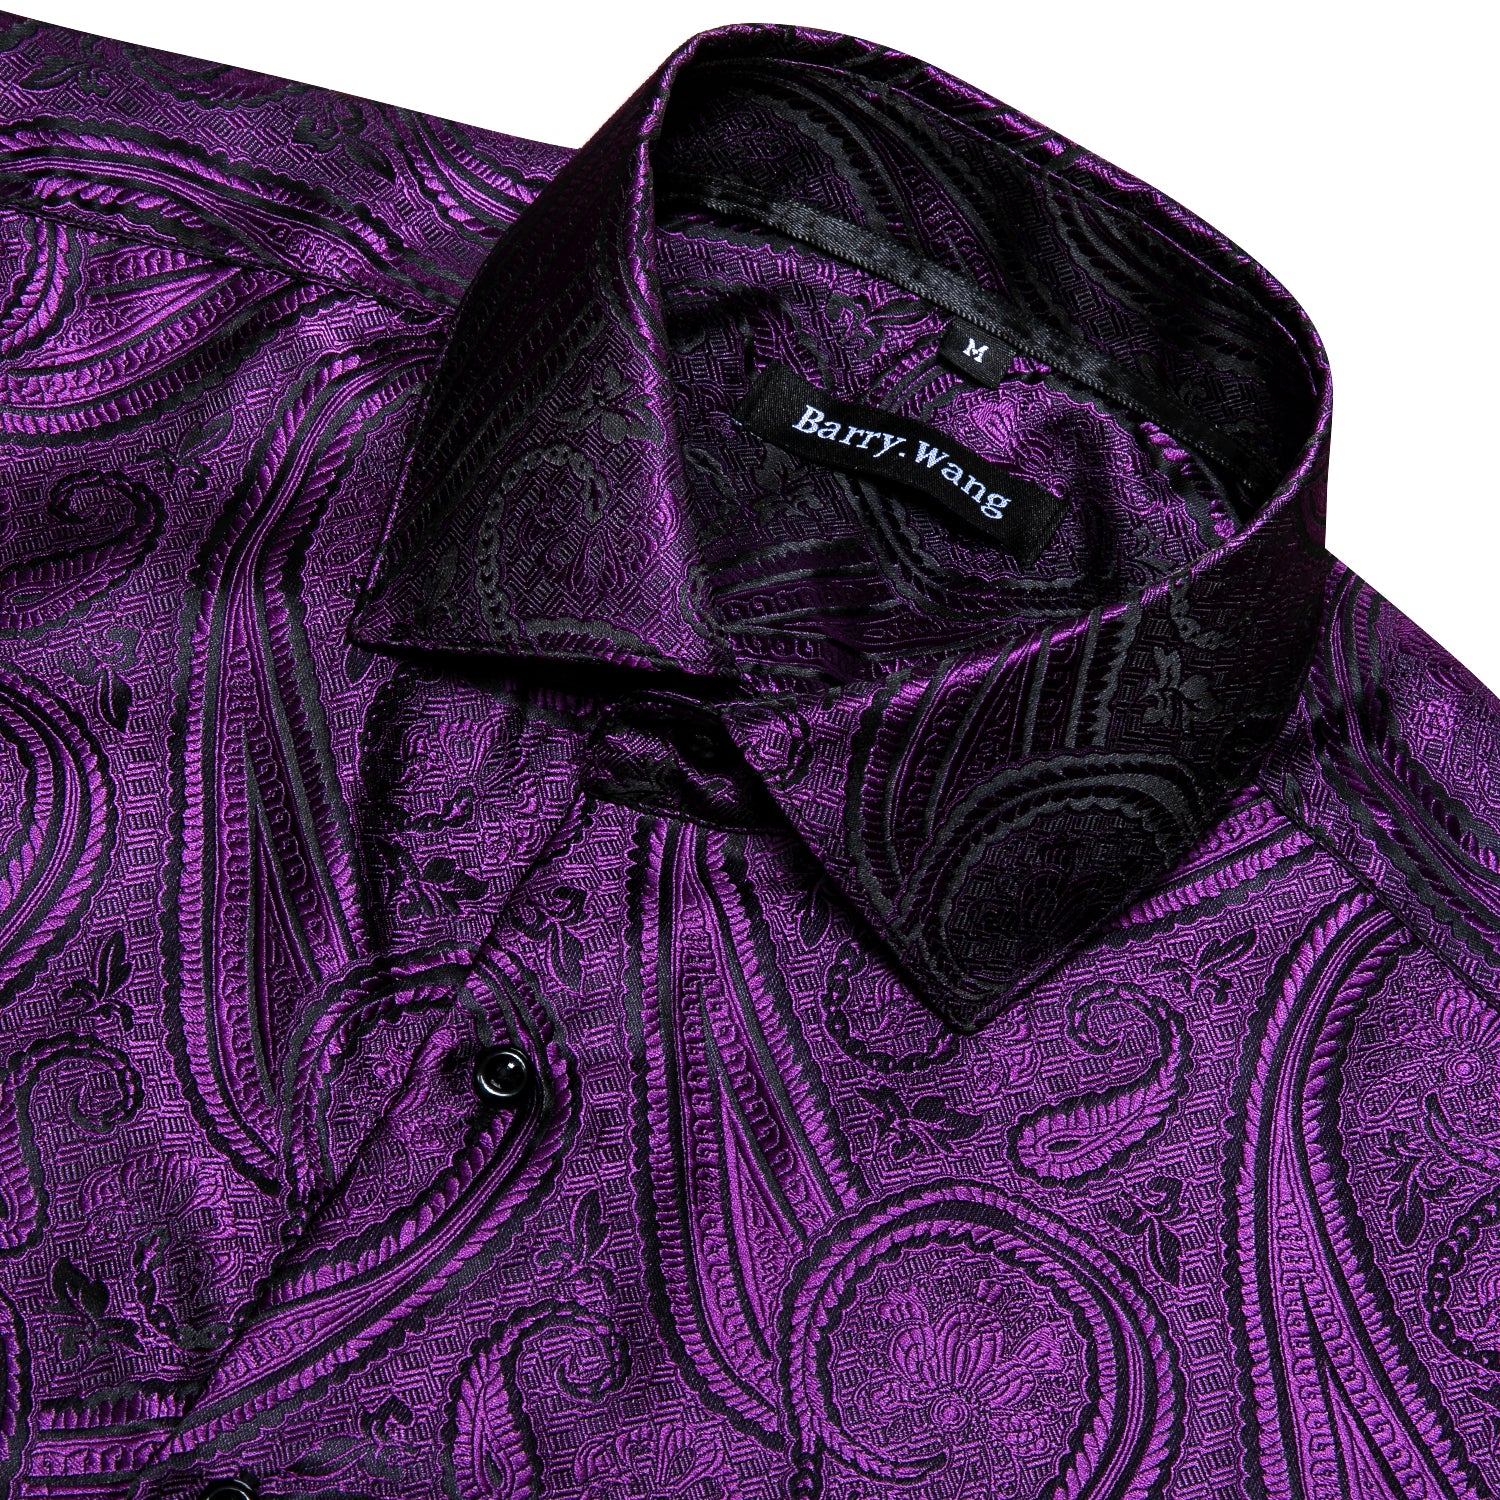 barry wang dark black deep purple bottom up shirts